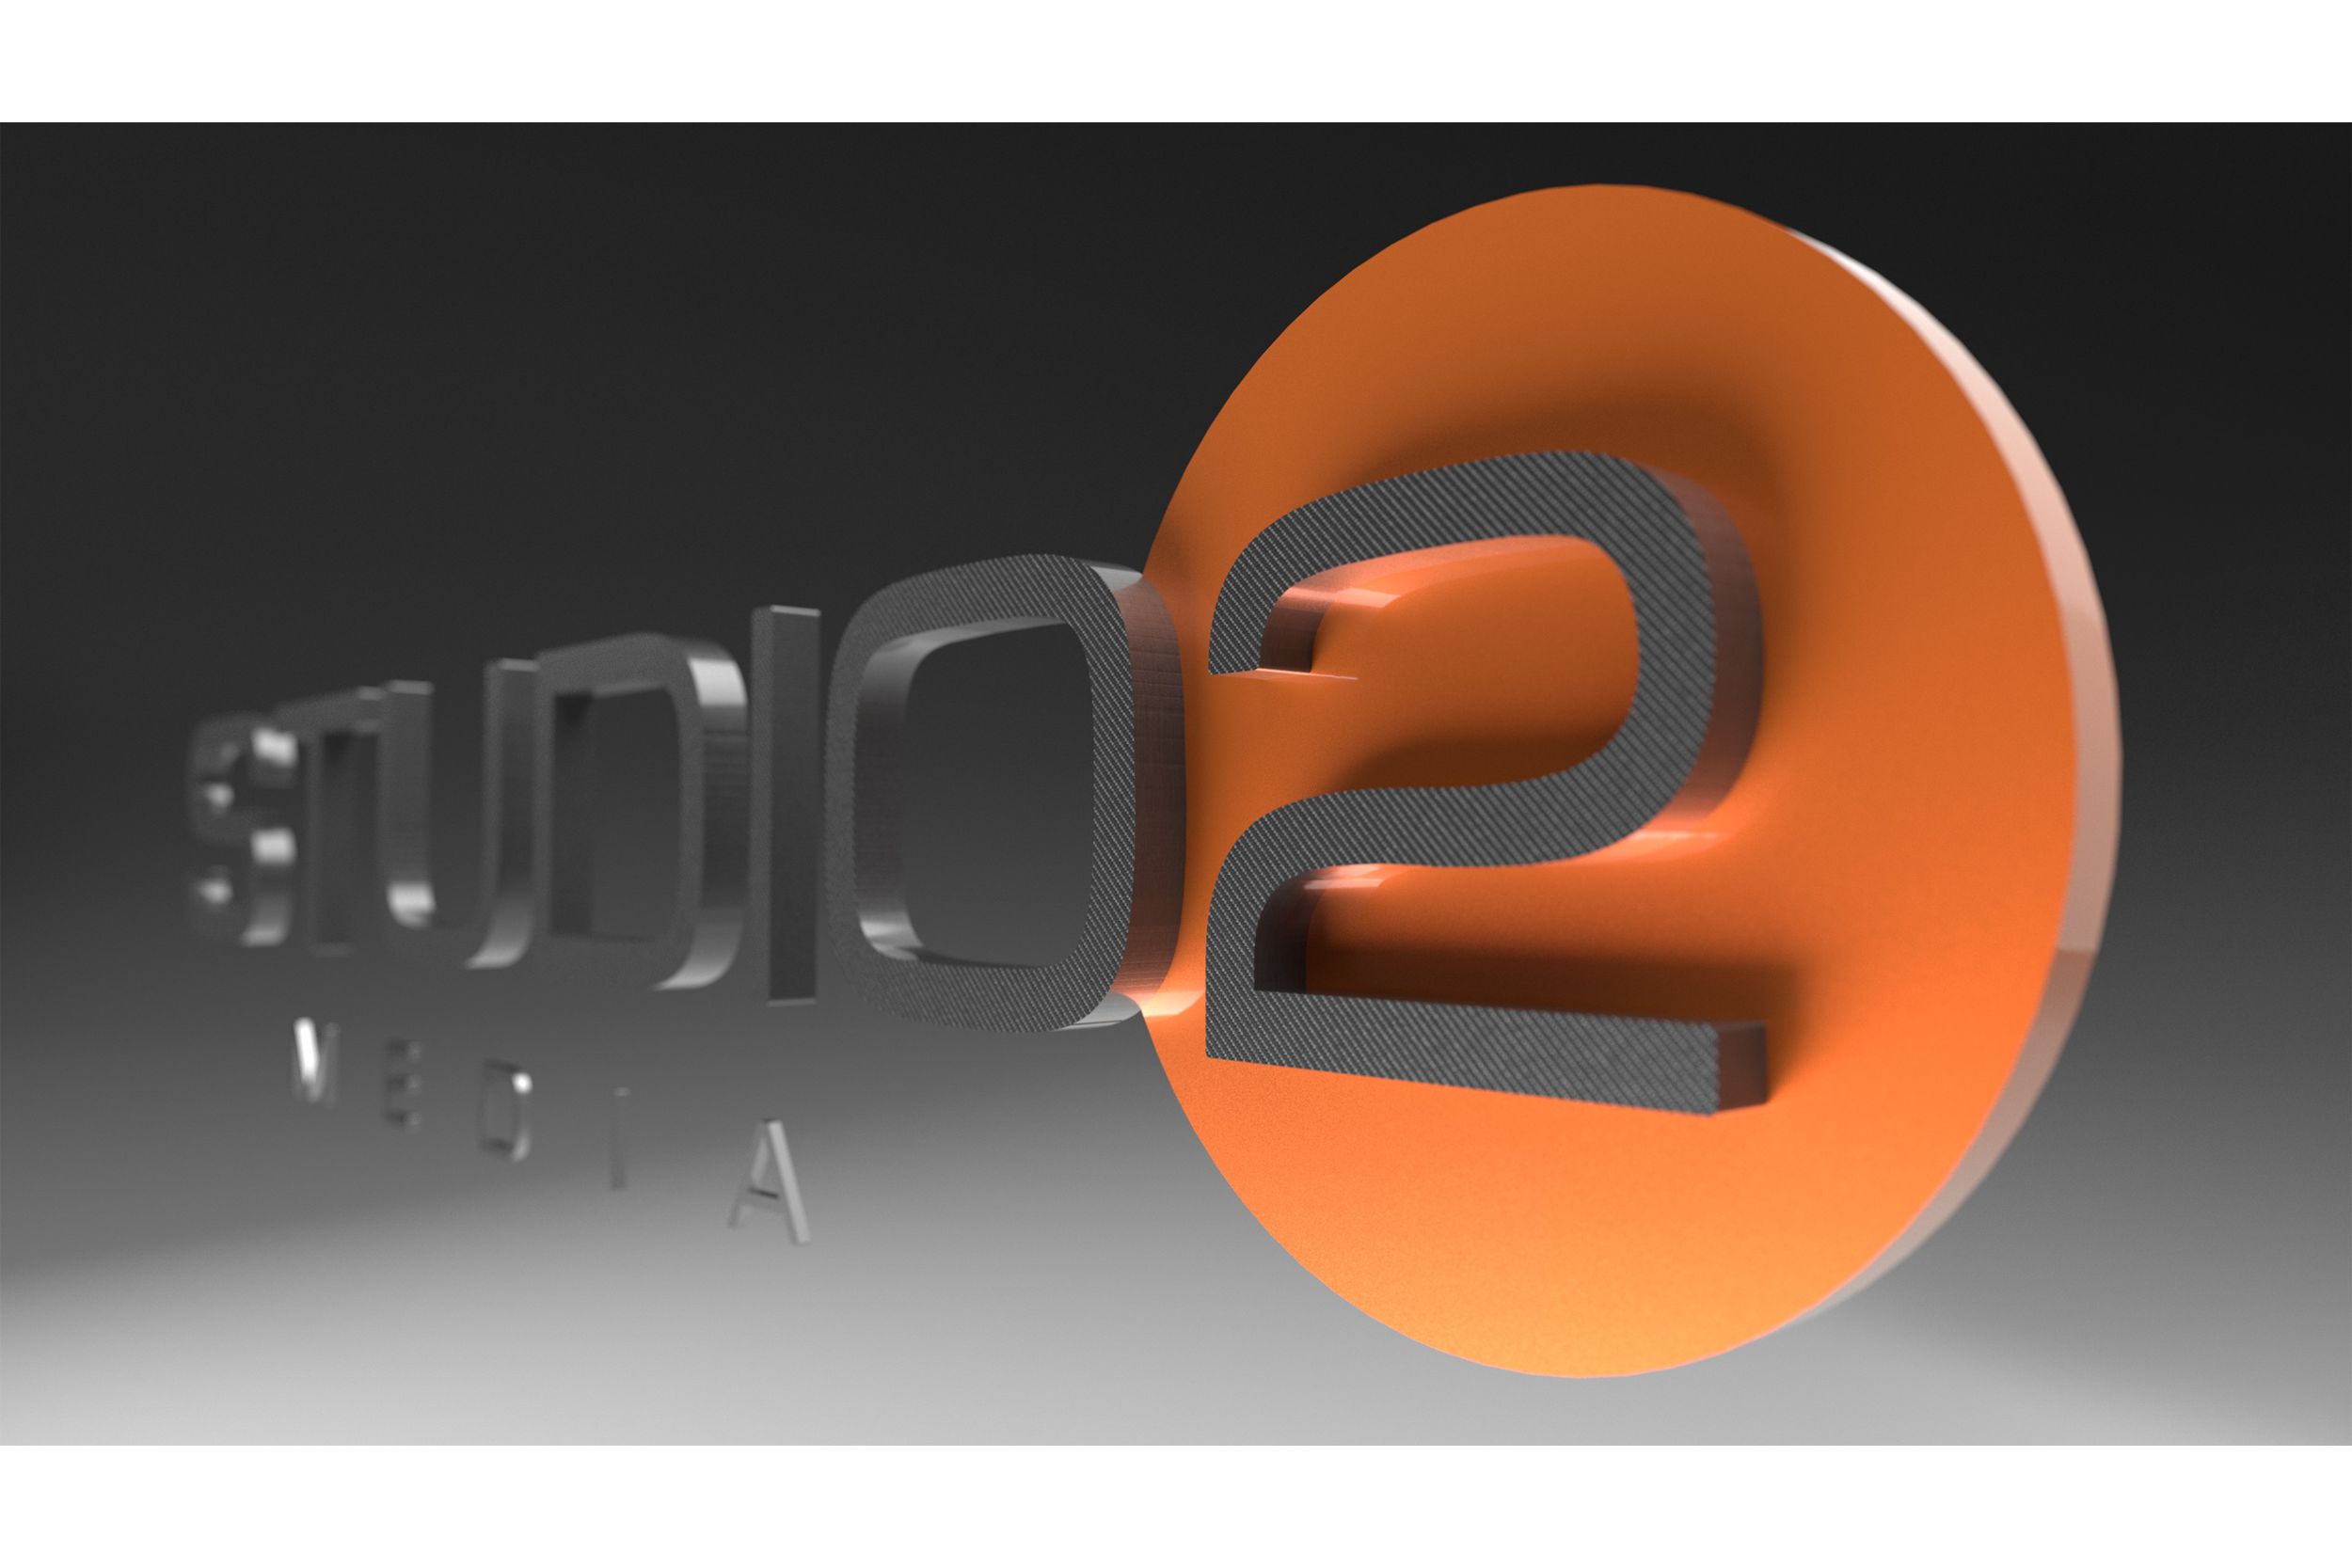 Gerendertes Logo in 3D in Carbon und Carpaint Orange